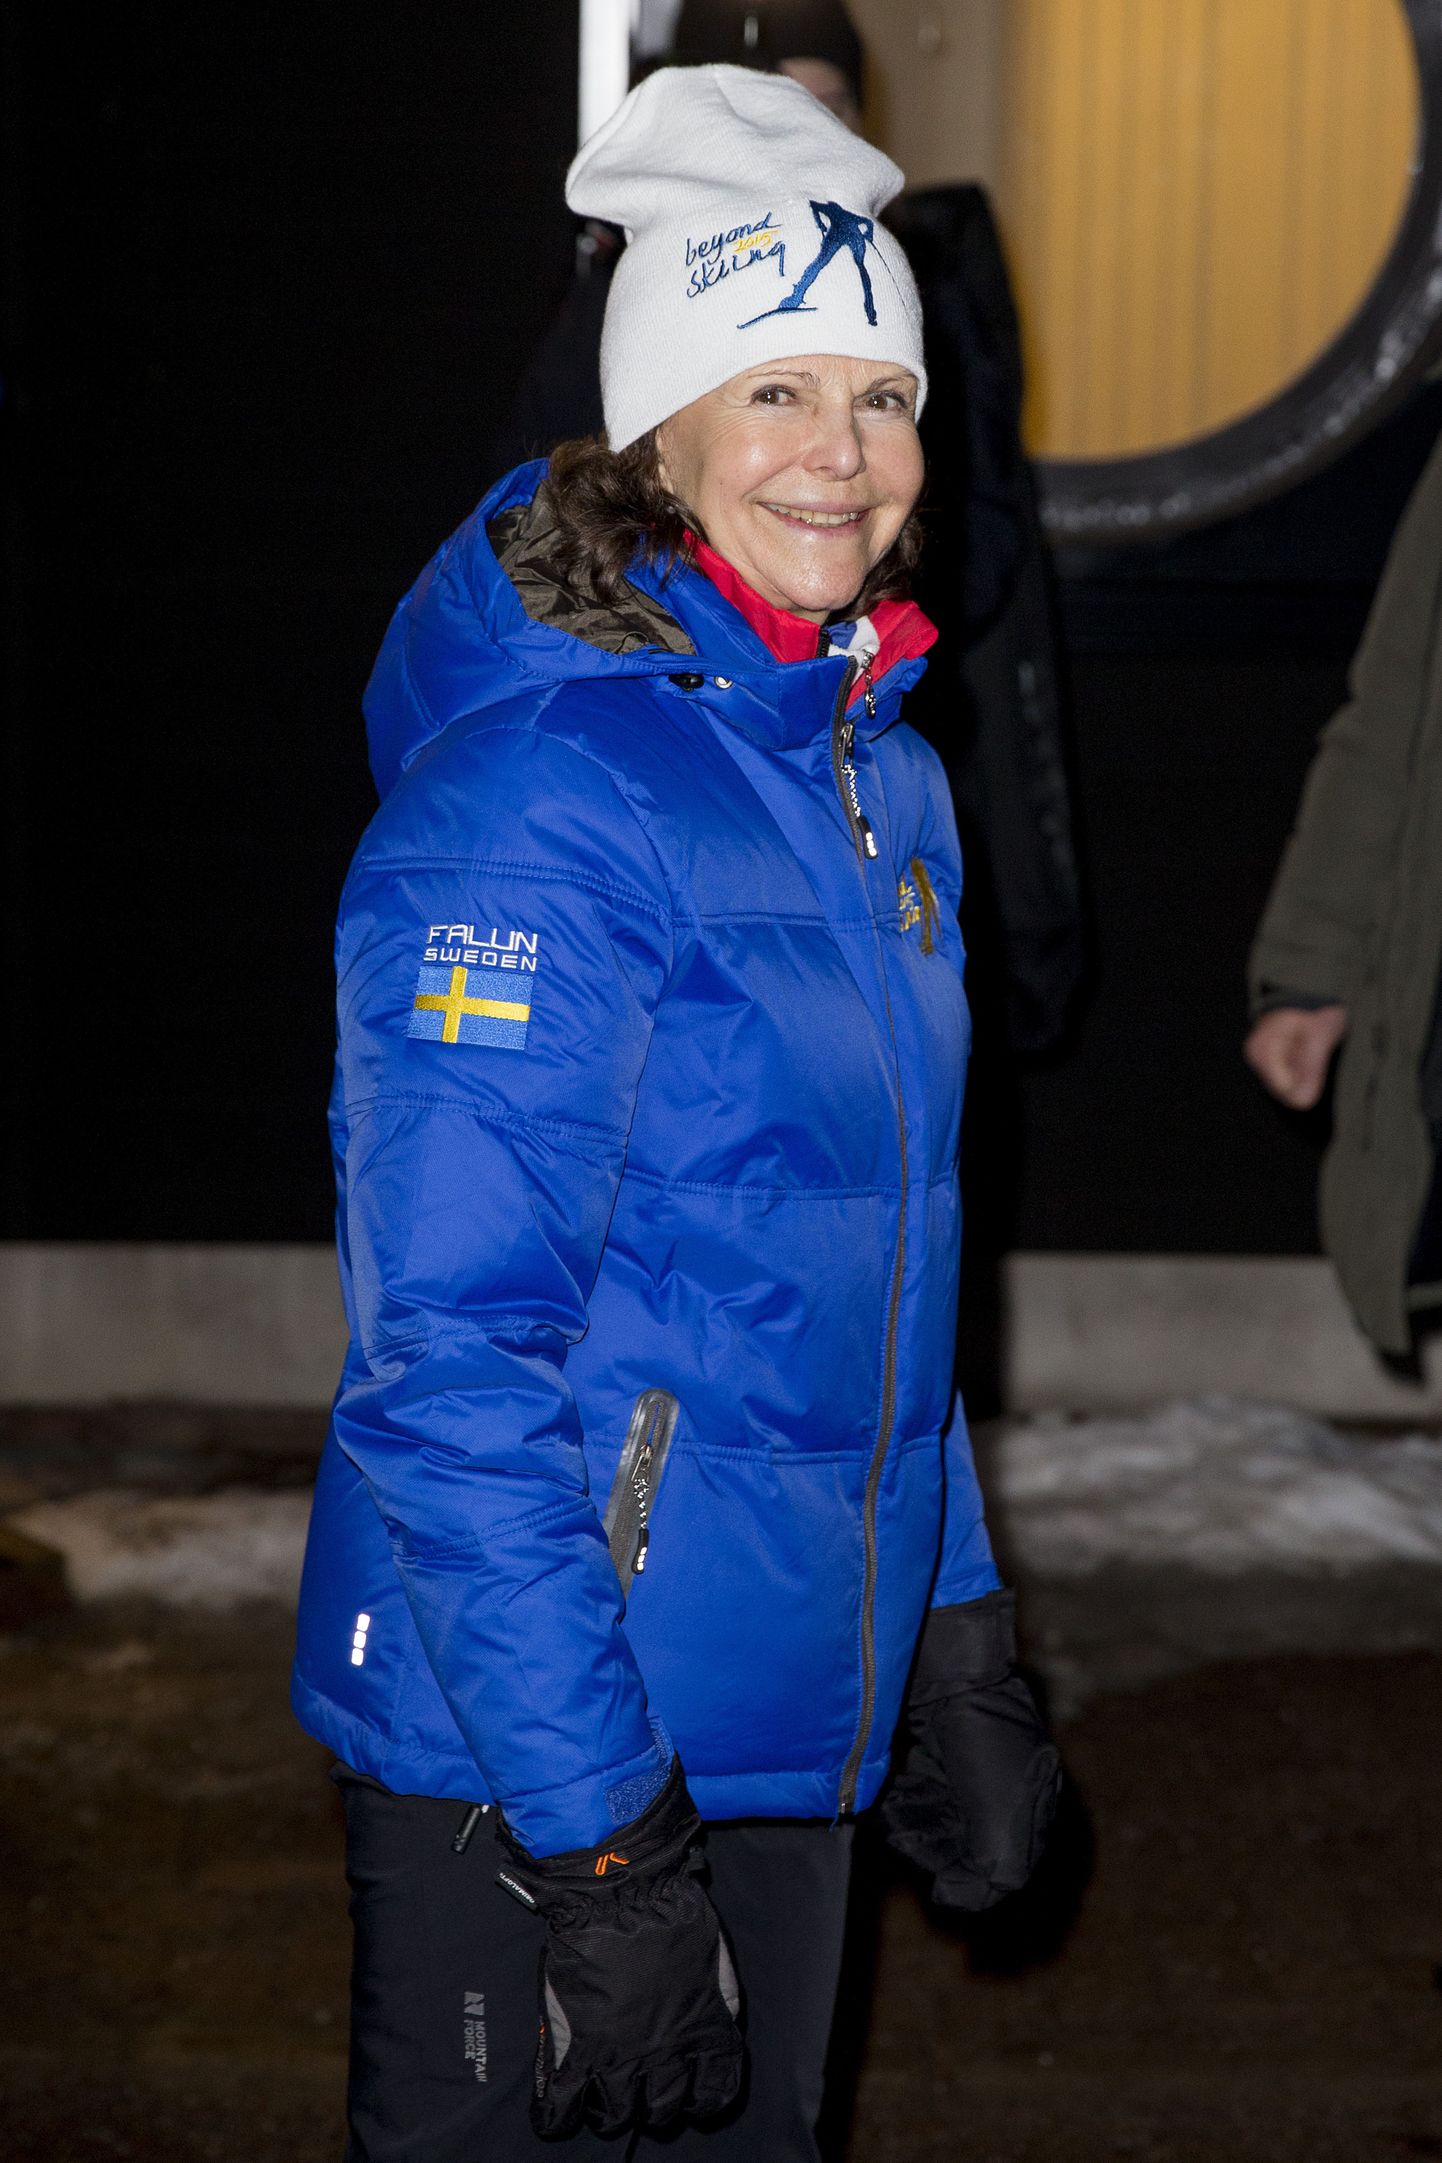 Rootsi kuninganna Silvia